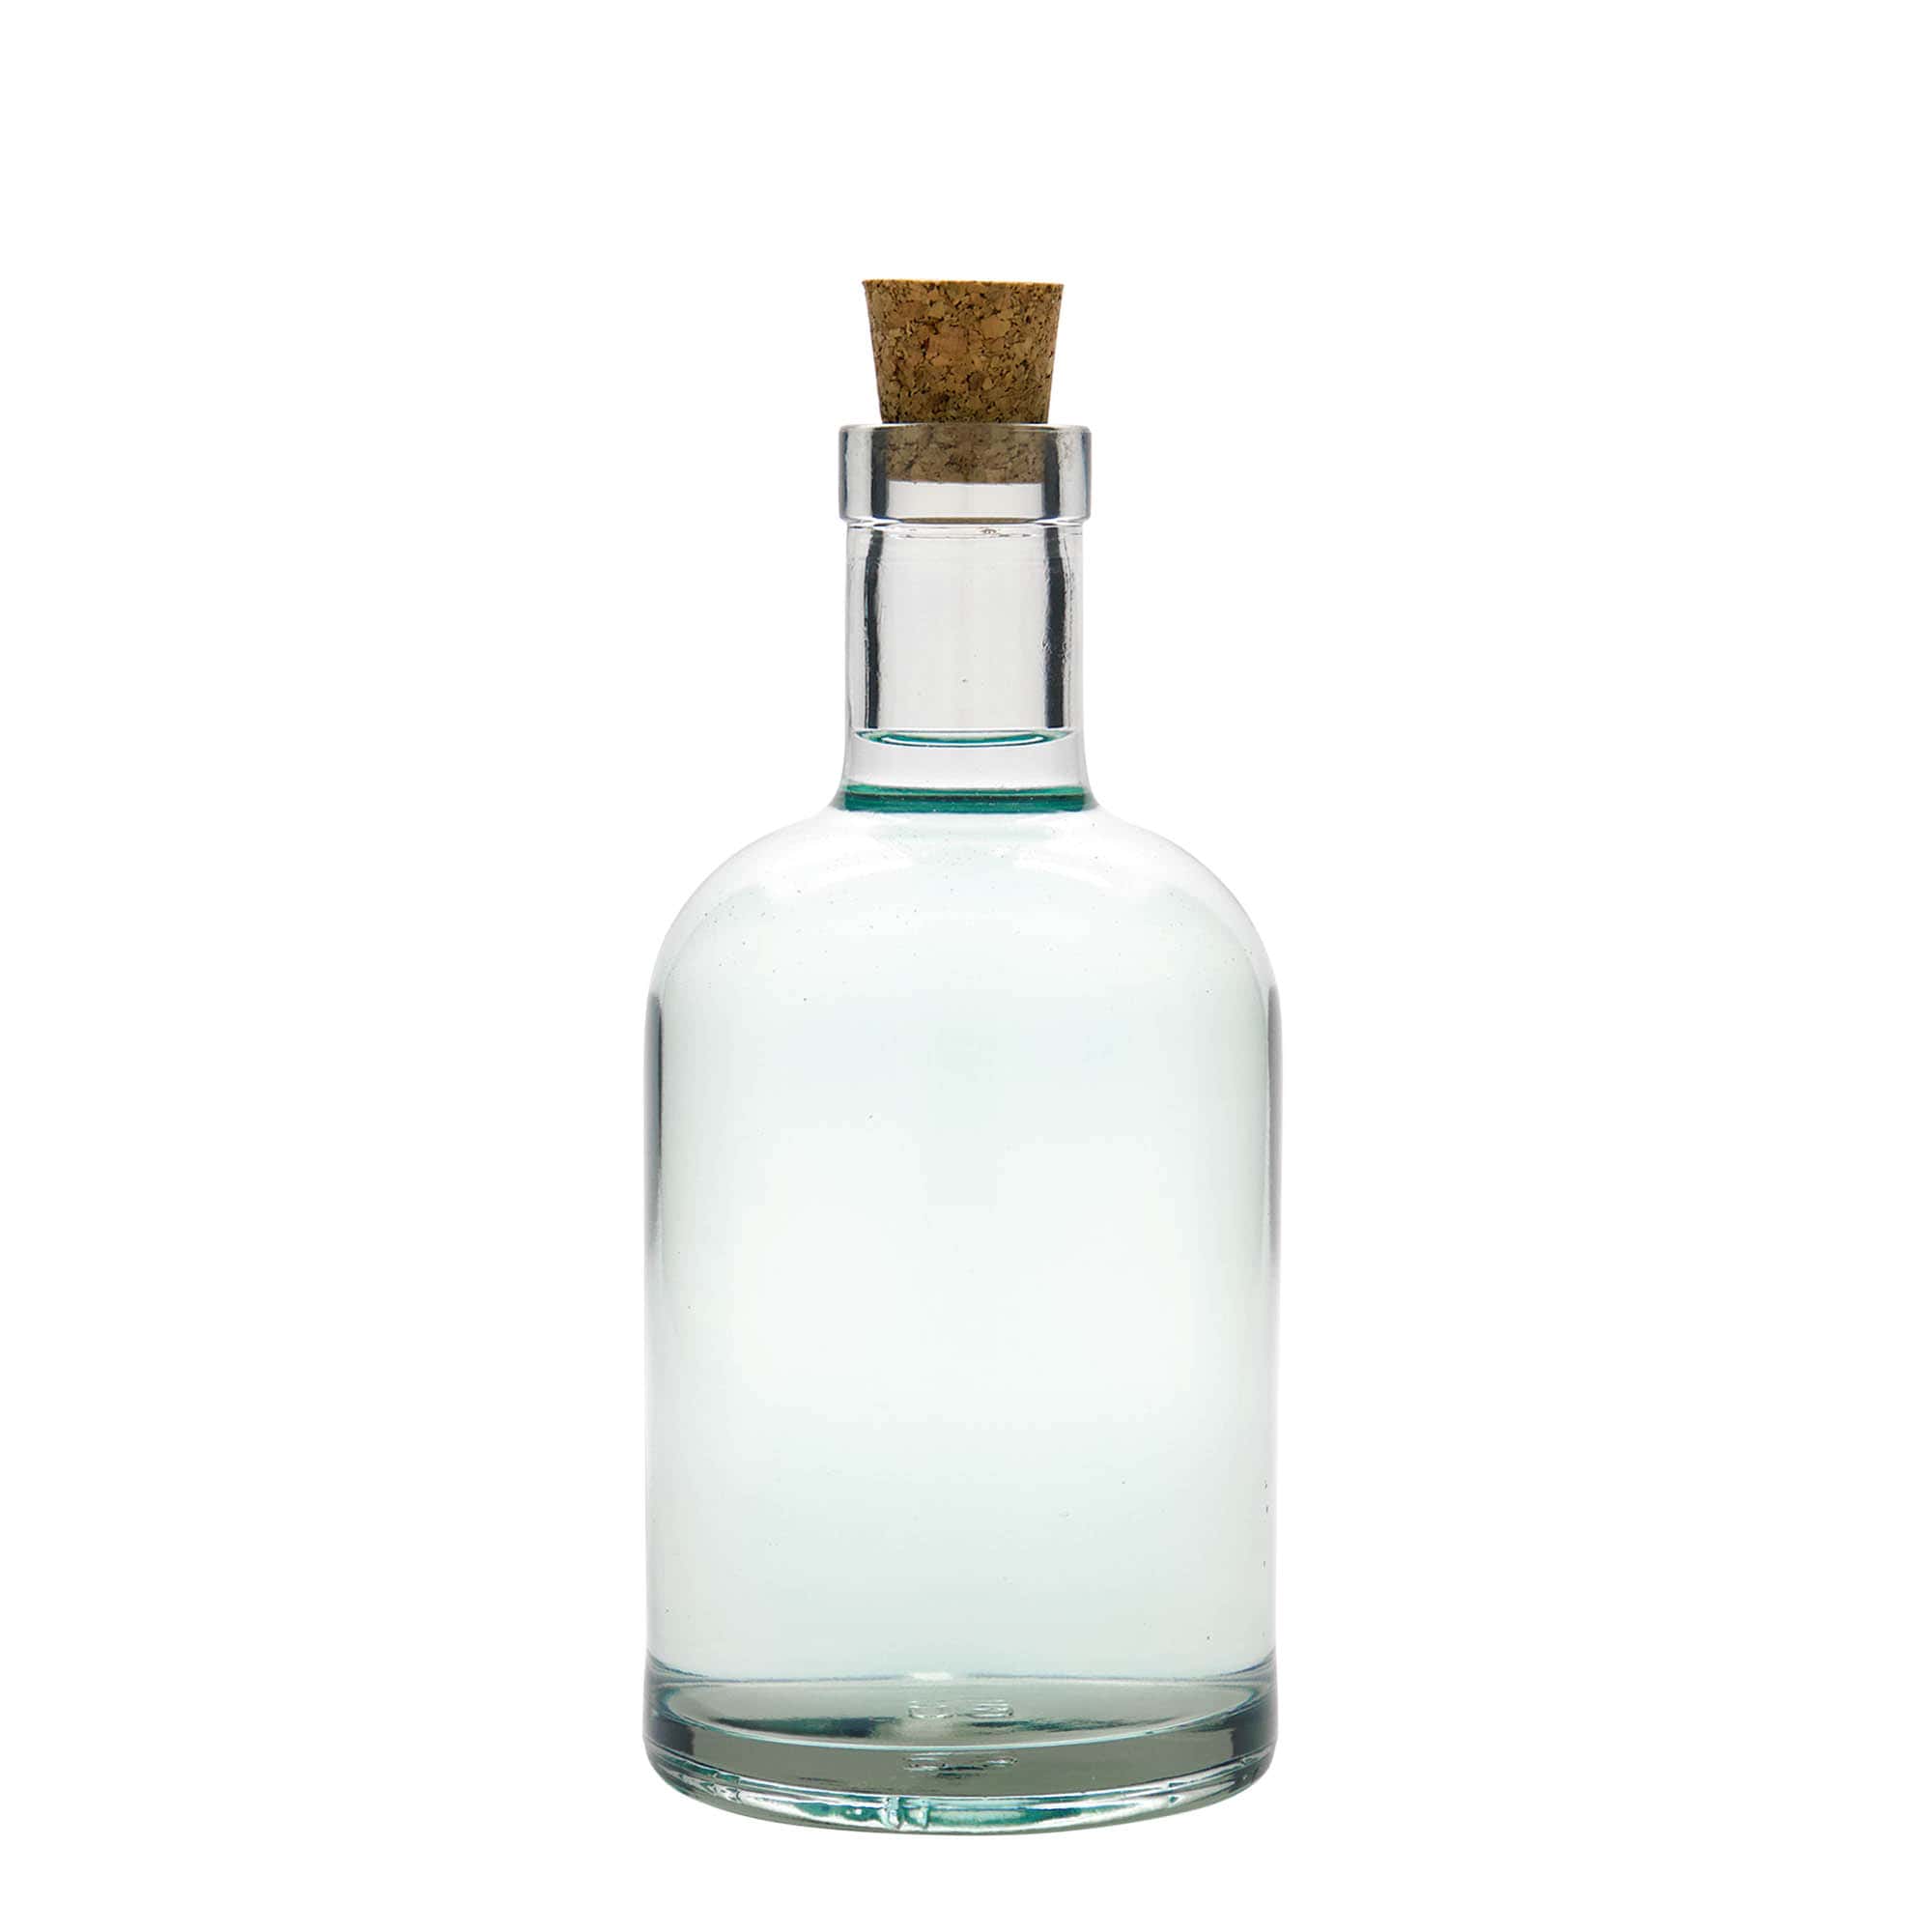 500 ml glass bottle 'Claus', closure: cork